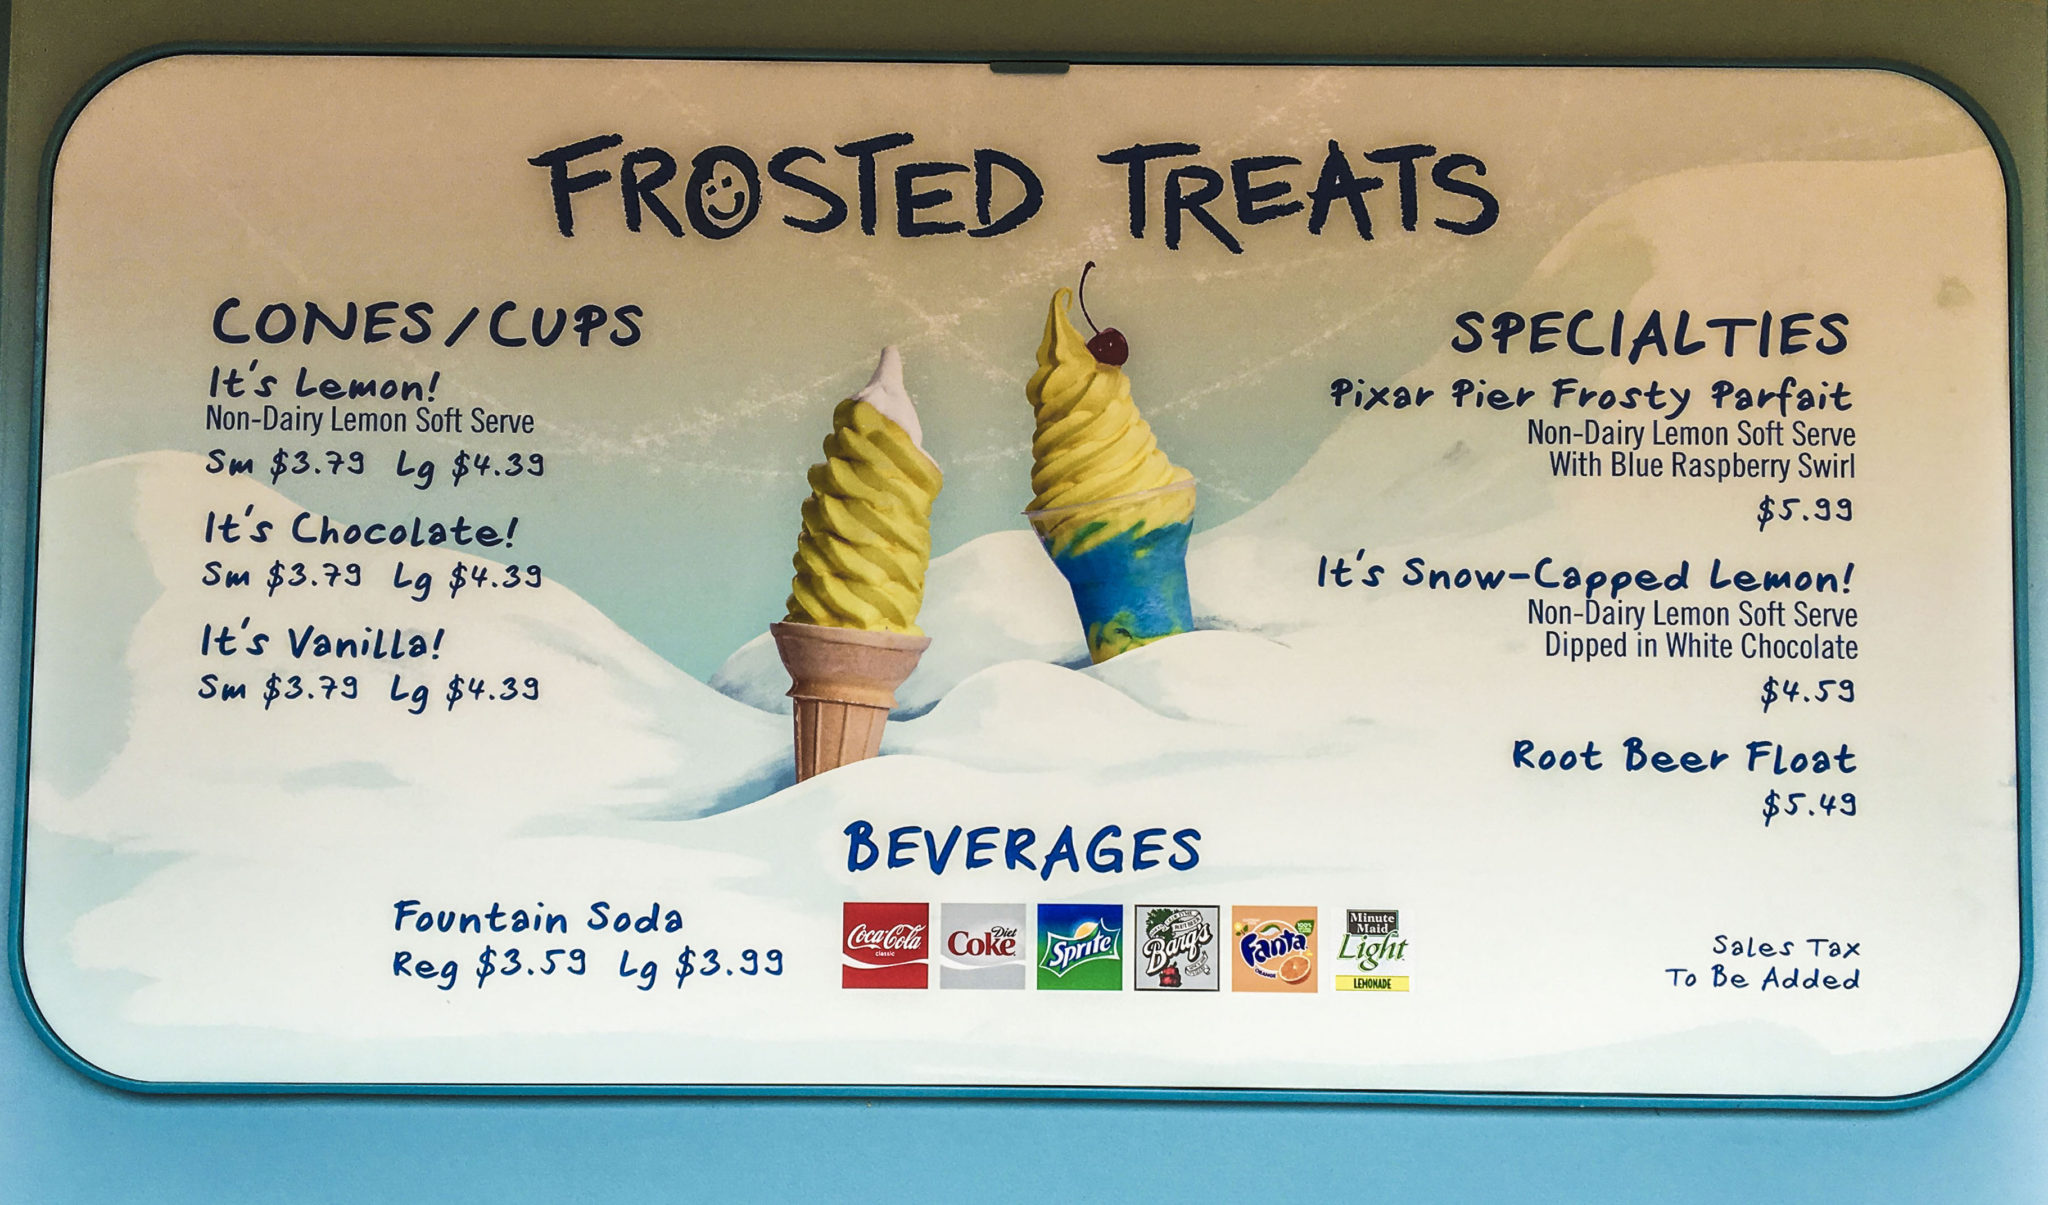 Pixar Pier Frosty Parfait/Adorable Frosted Treats is OPEN! 